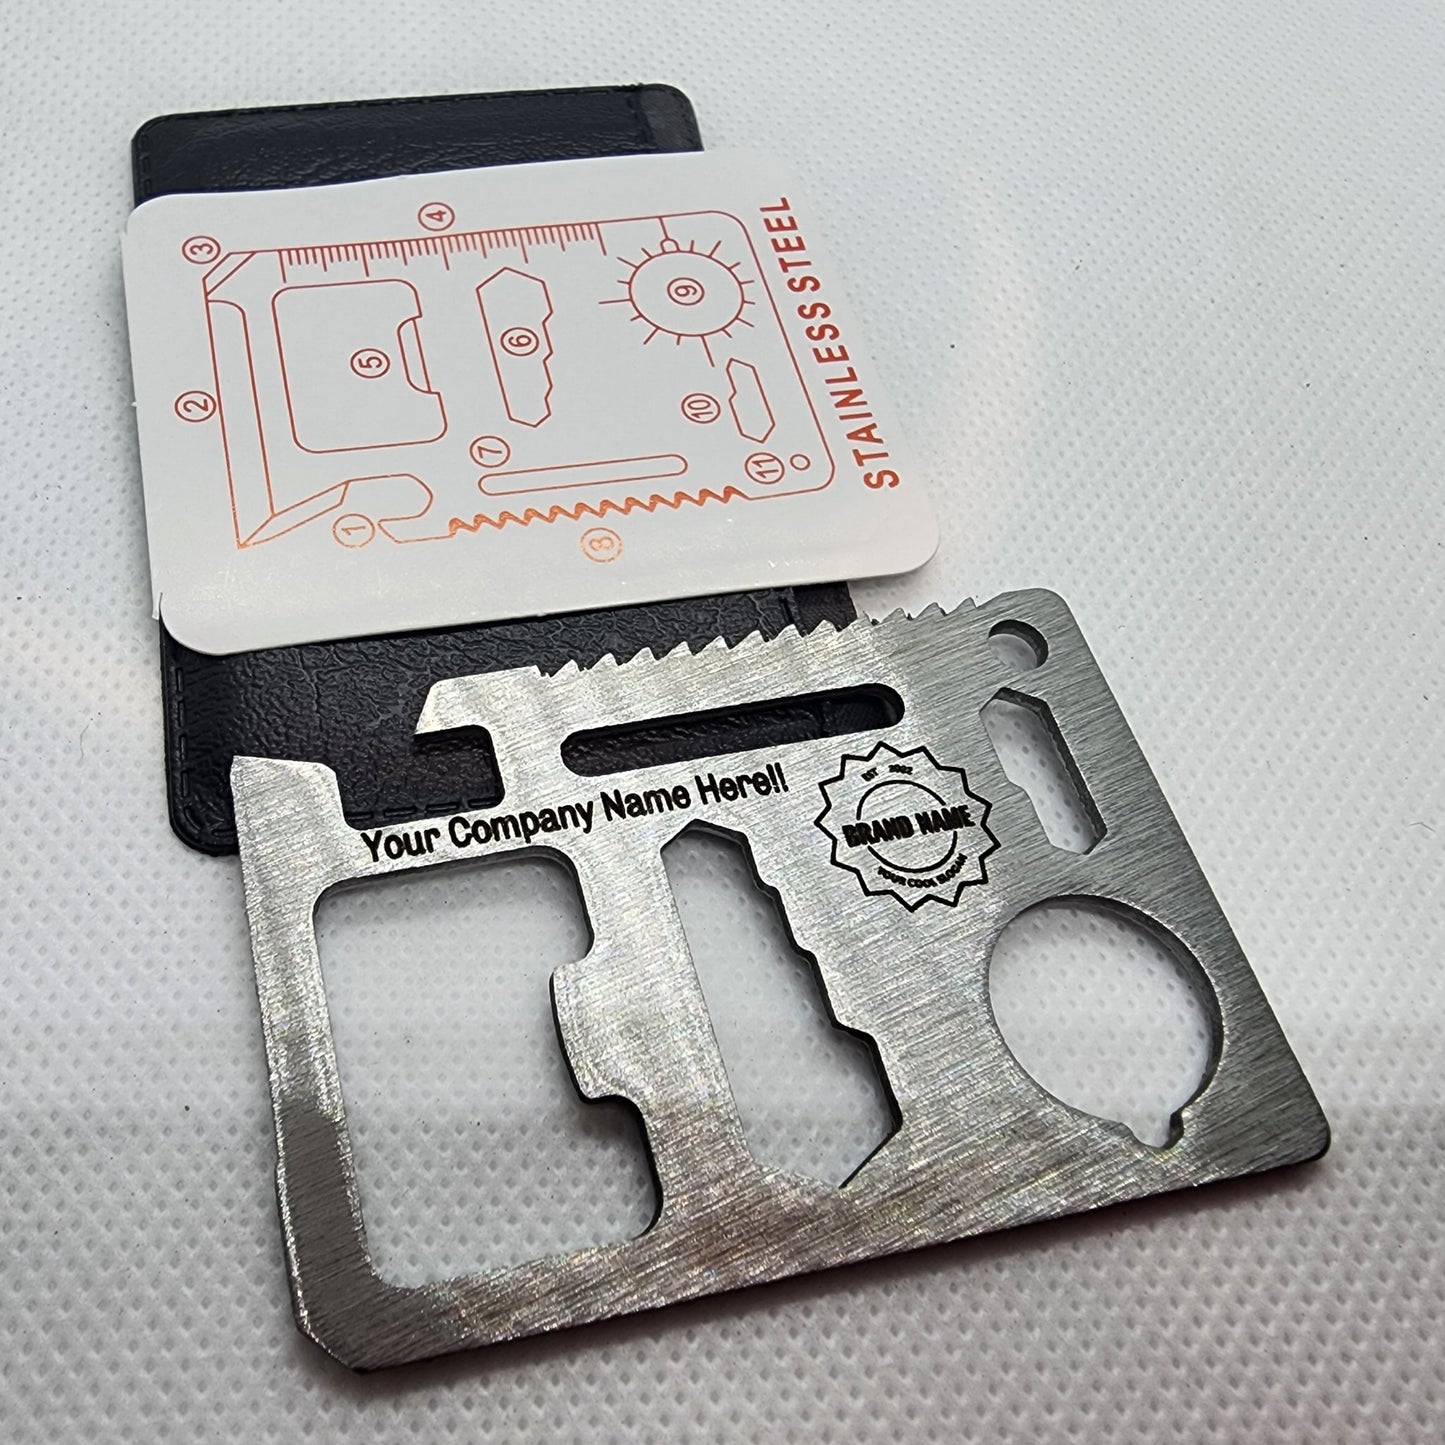 Custom Engraved Pocket Survival Tool